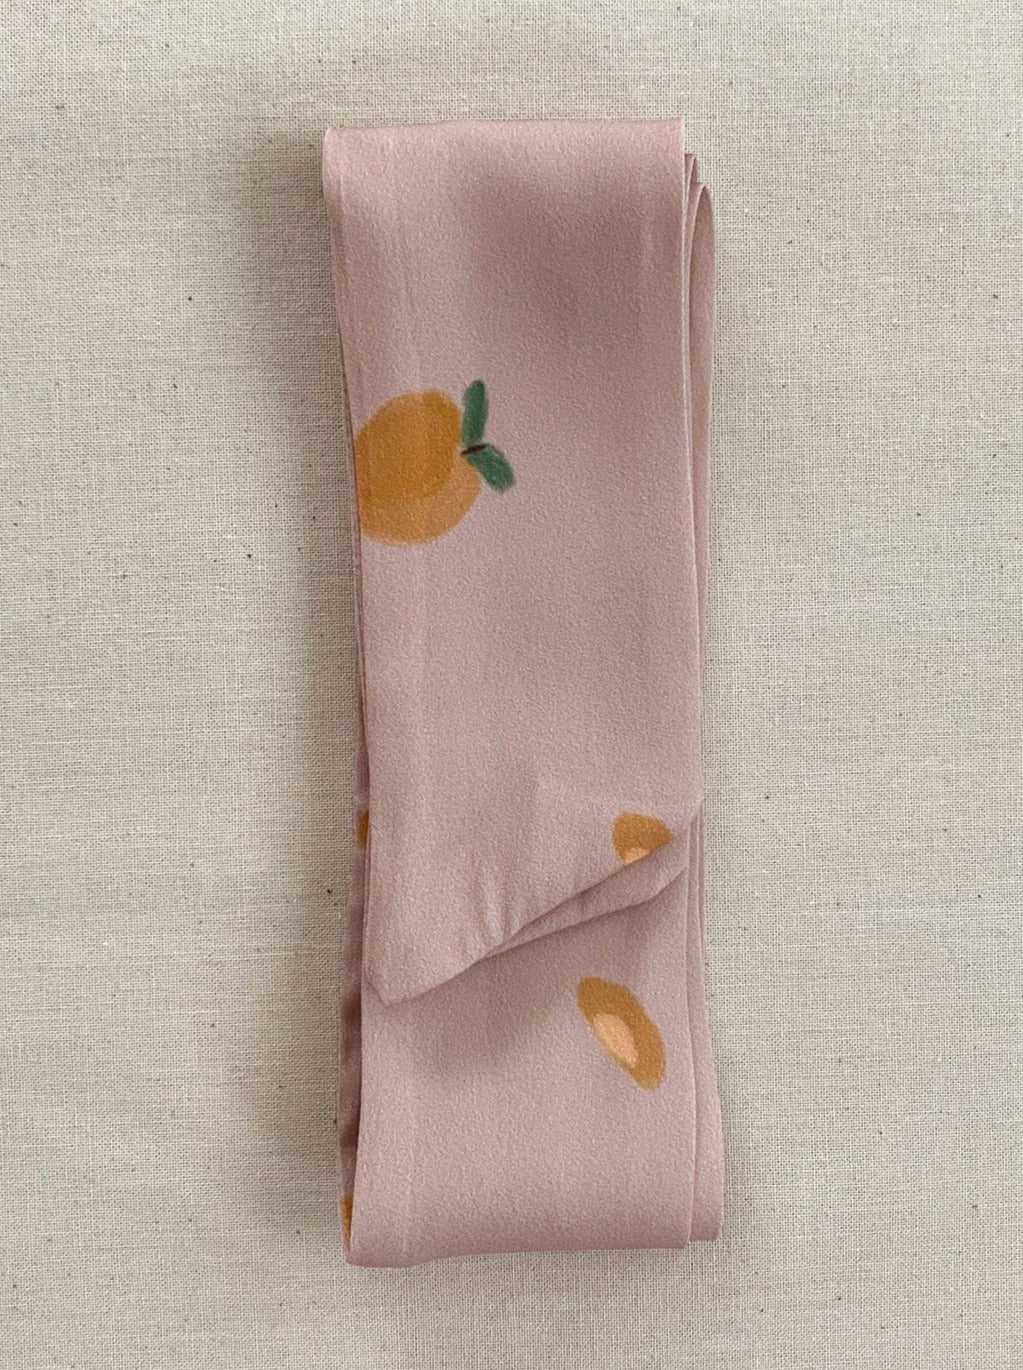 Apricot hair ribbon